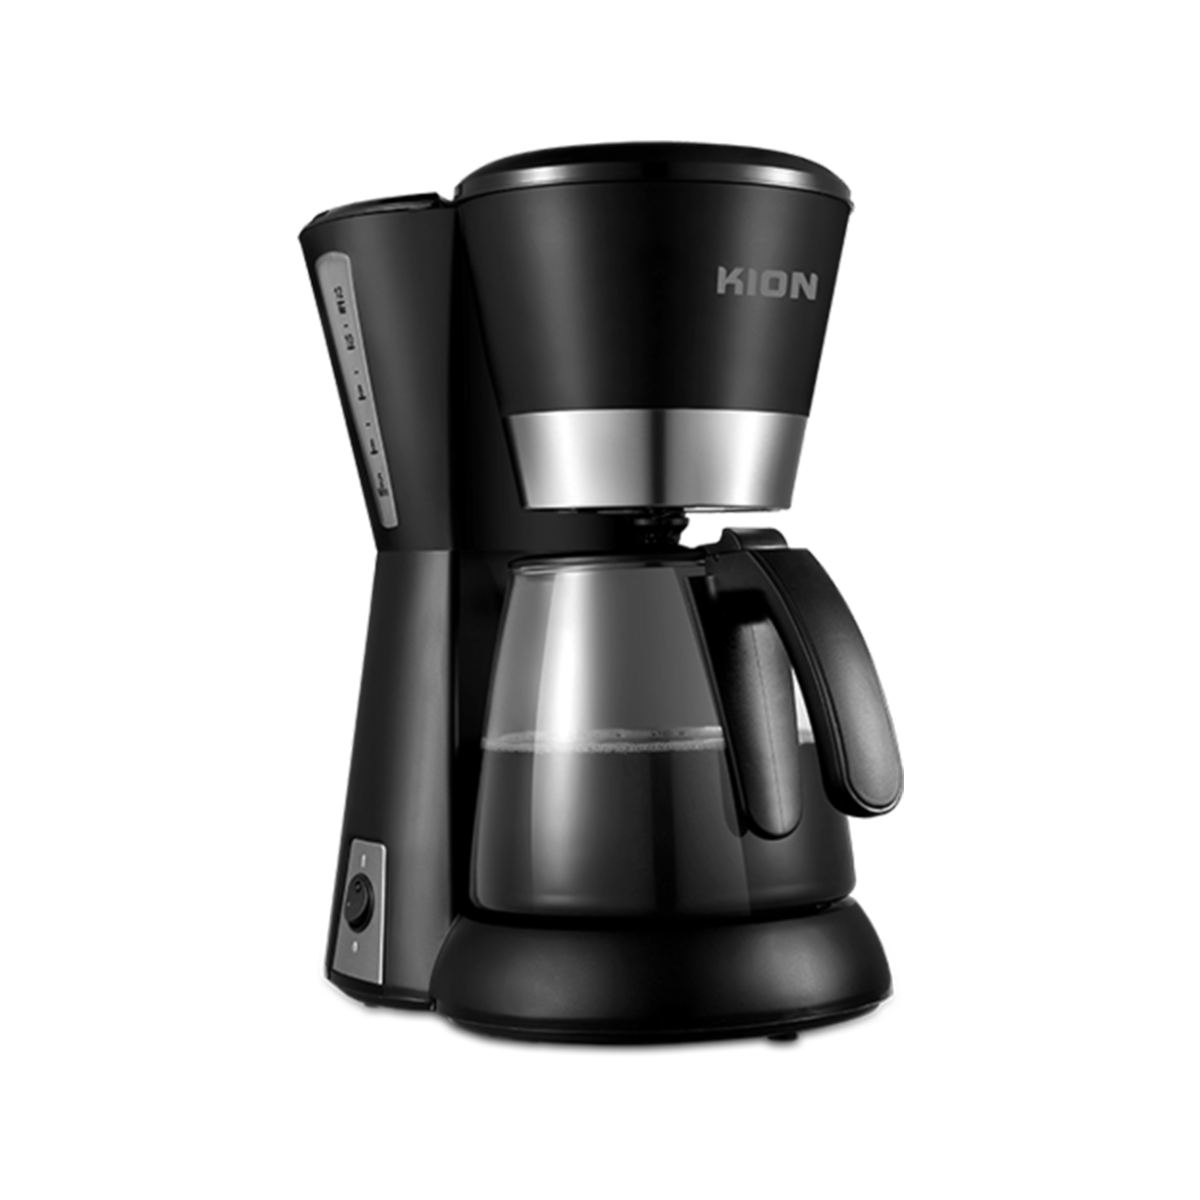 KION Coffee Maker 1.5 Liter, 920 Watt - 1080 Watt - KHD-503